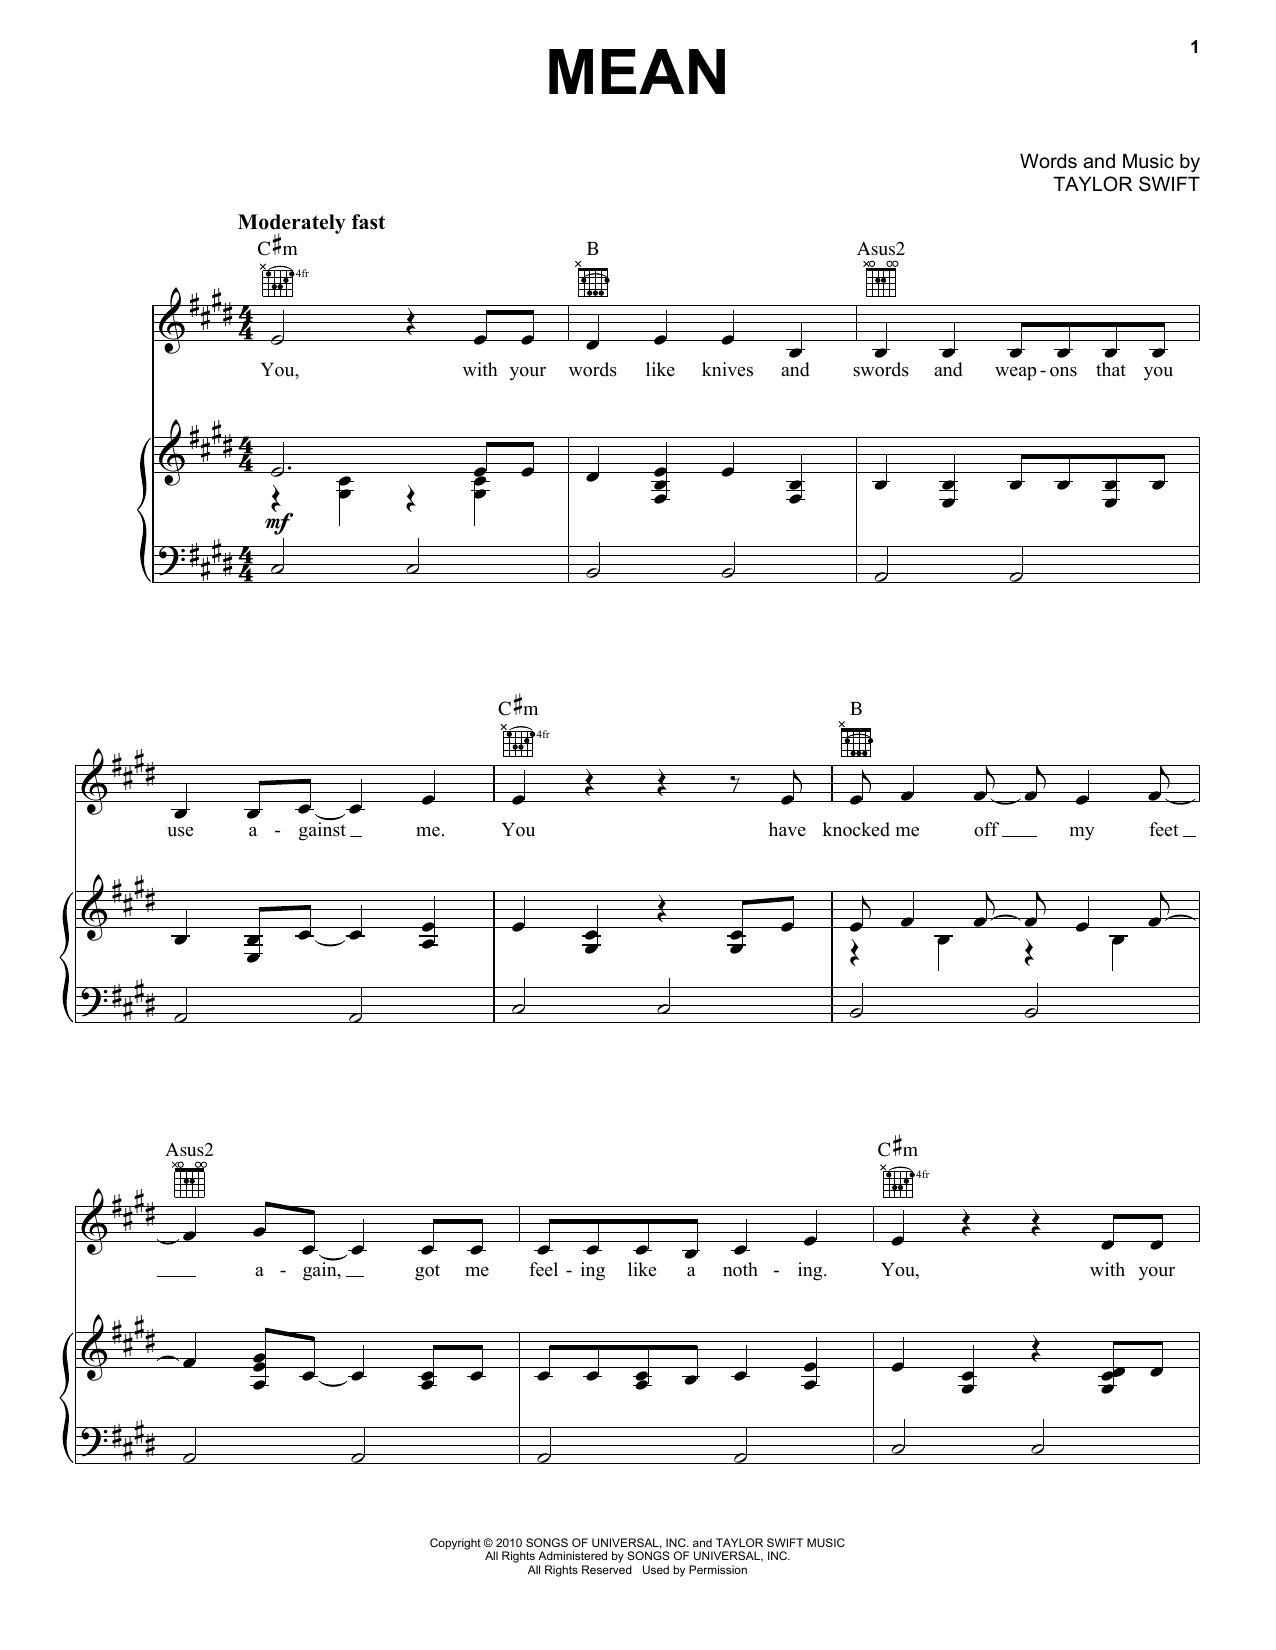 Taylor Swift Mean Sheet Music Notes & Chords for Ukulele - Download or Print PDF